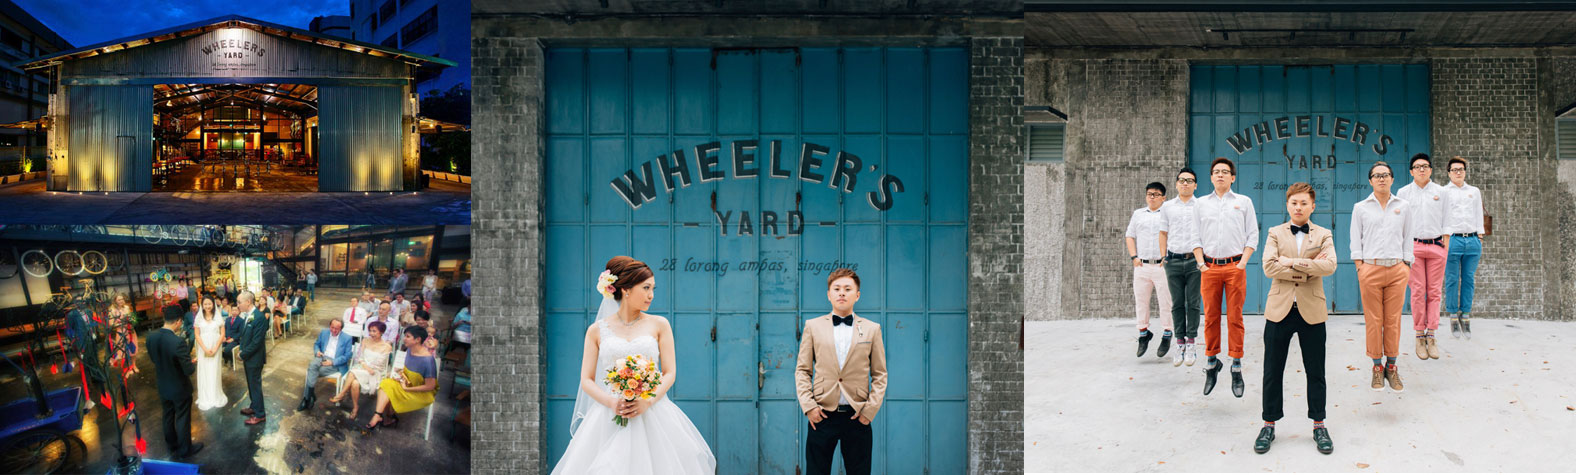 Wheelers-Yard-wedding